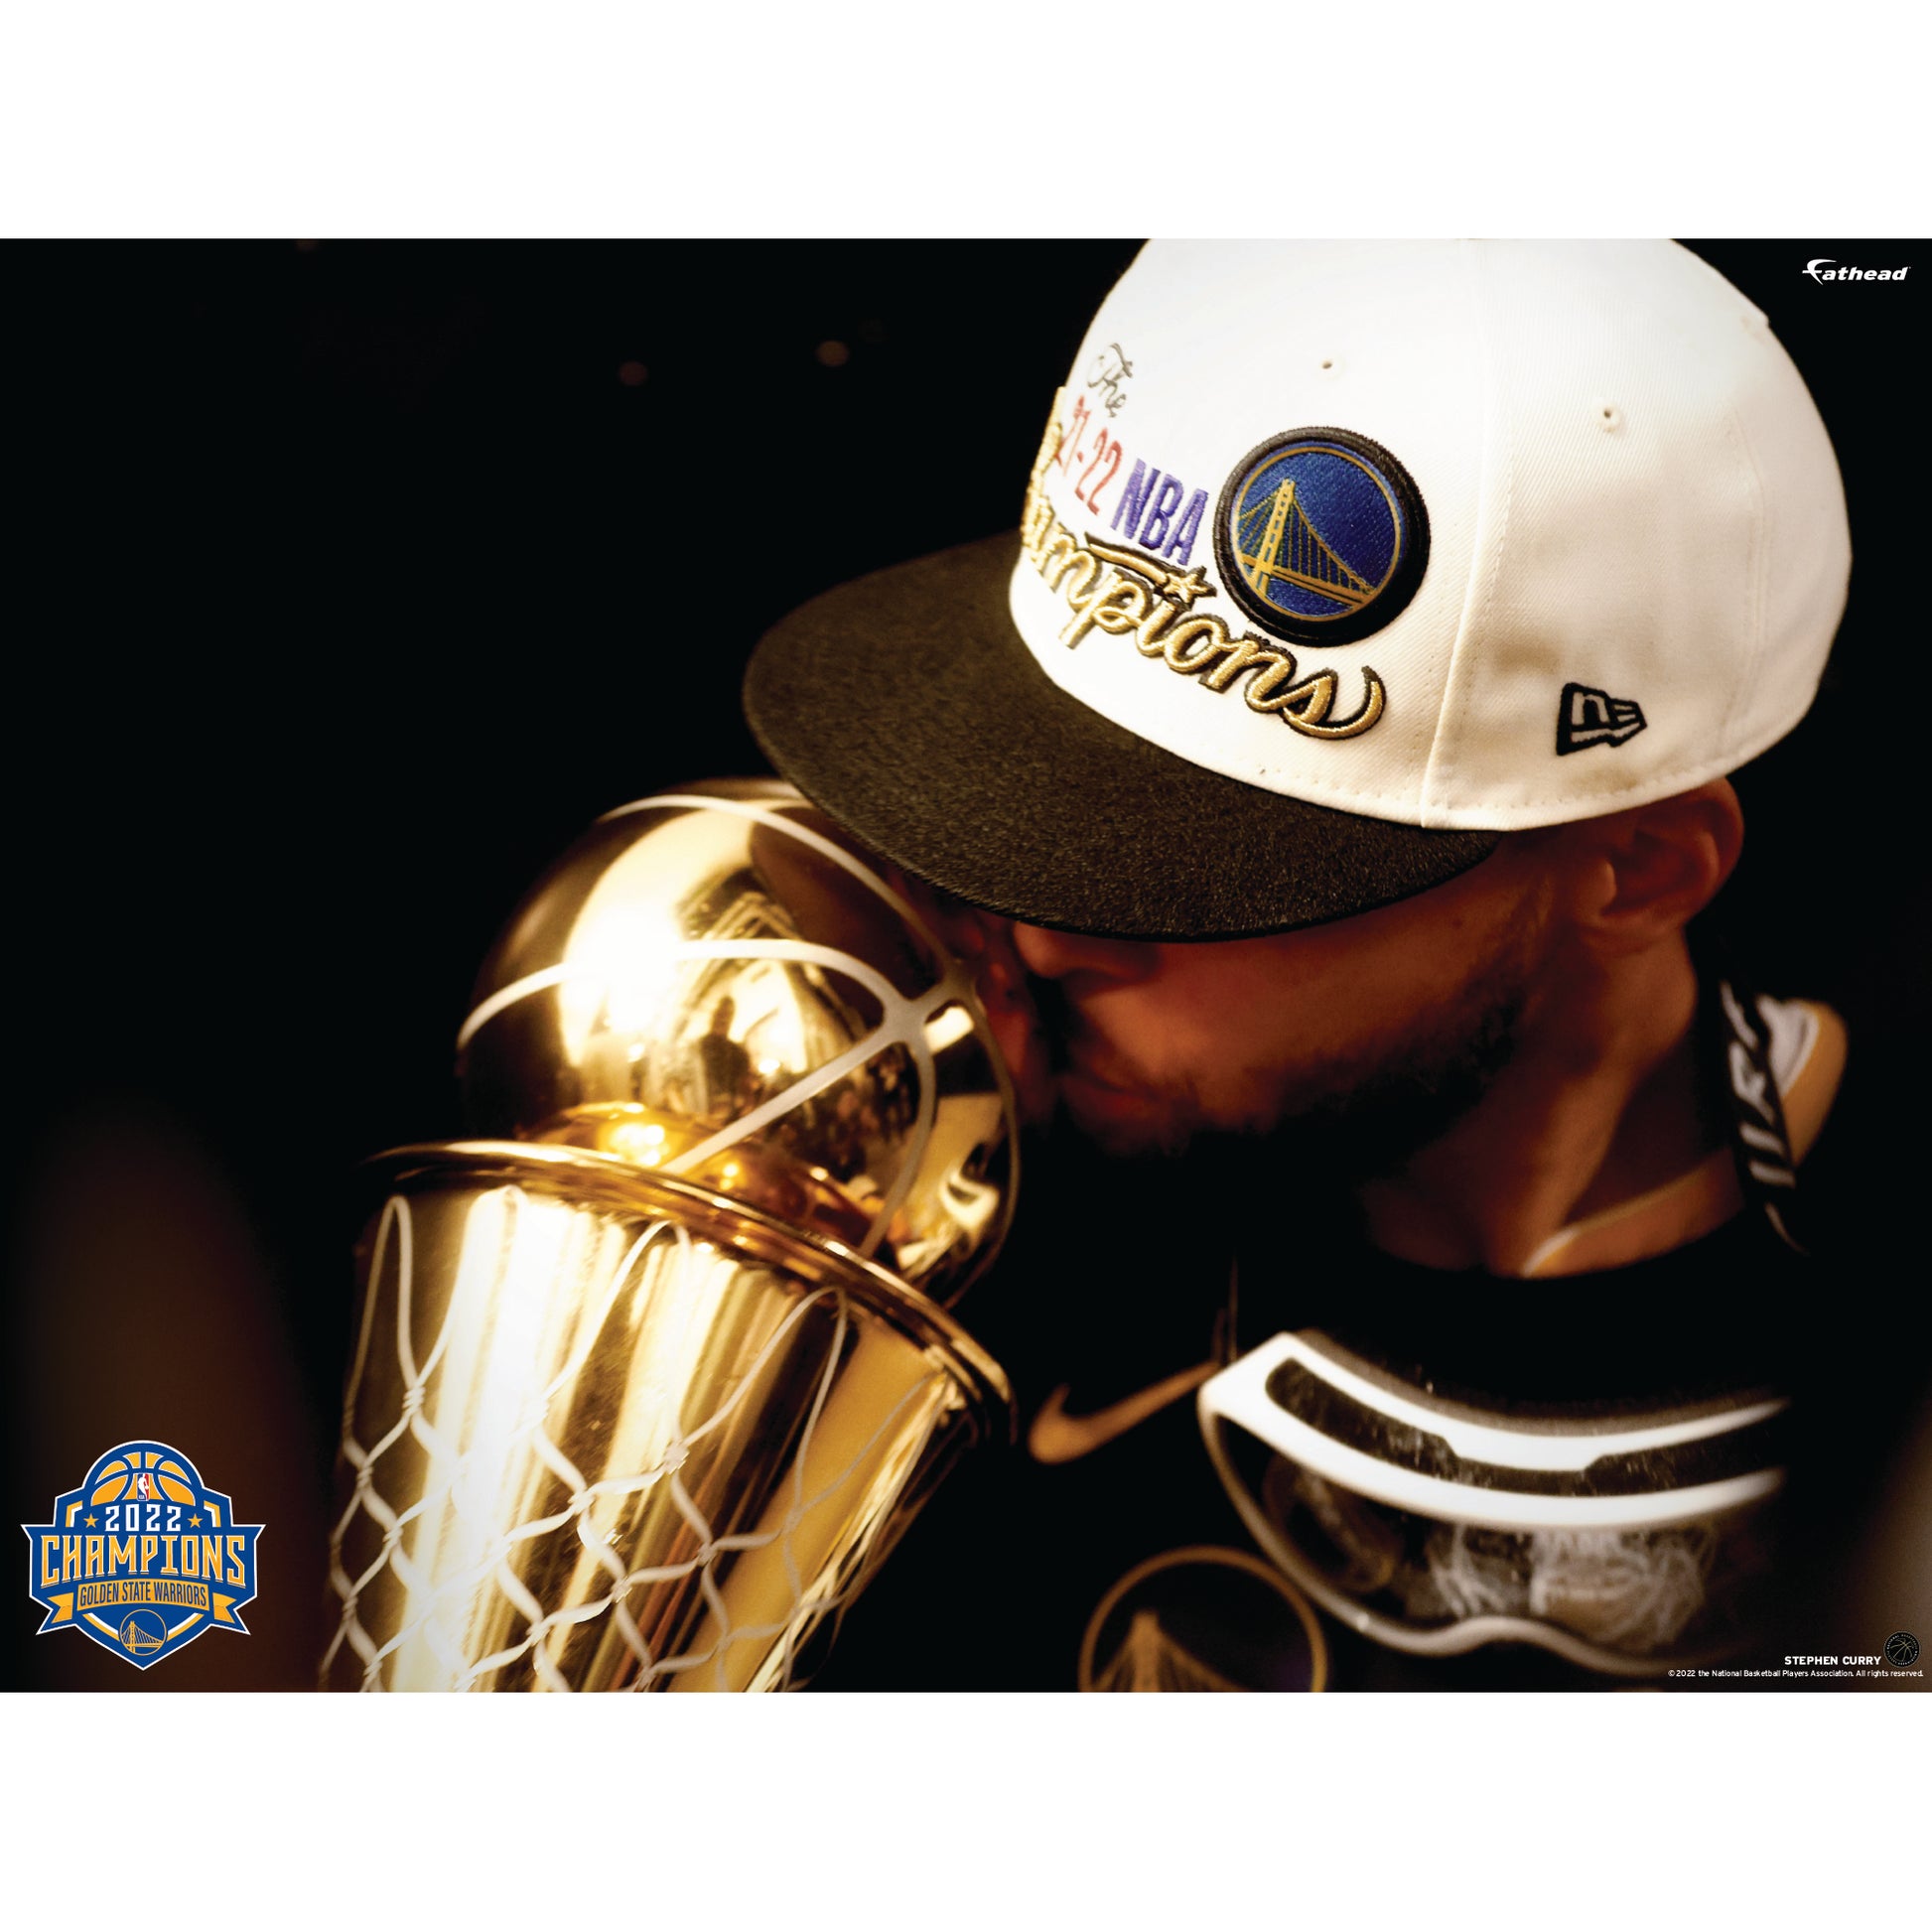 Golden State Warriors Champions 2022 Decal Sticker Basketball NBA  Championship